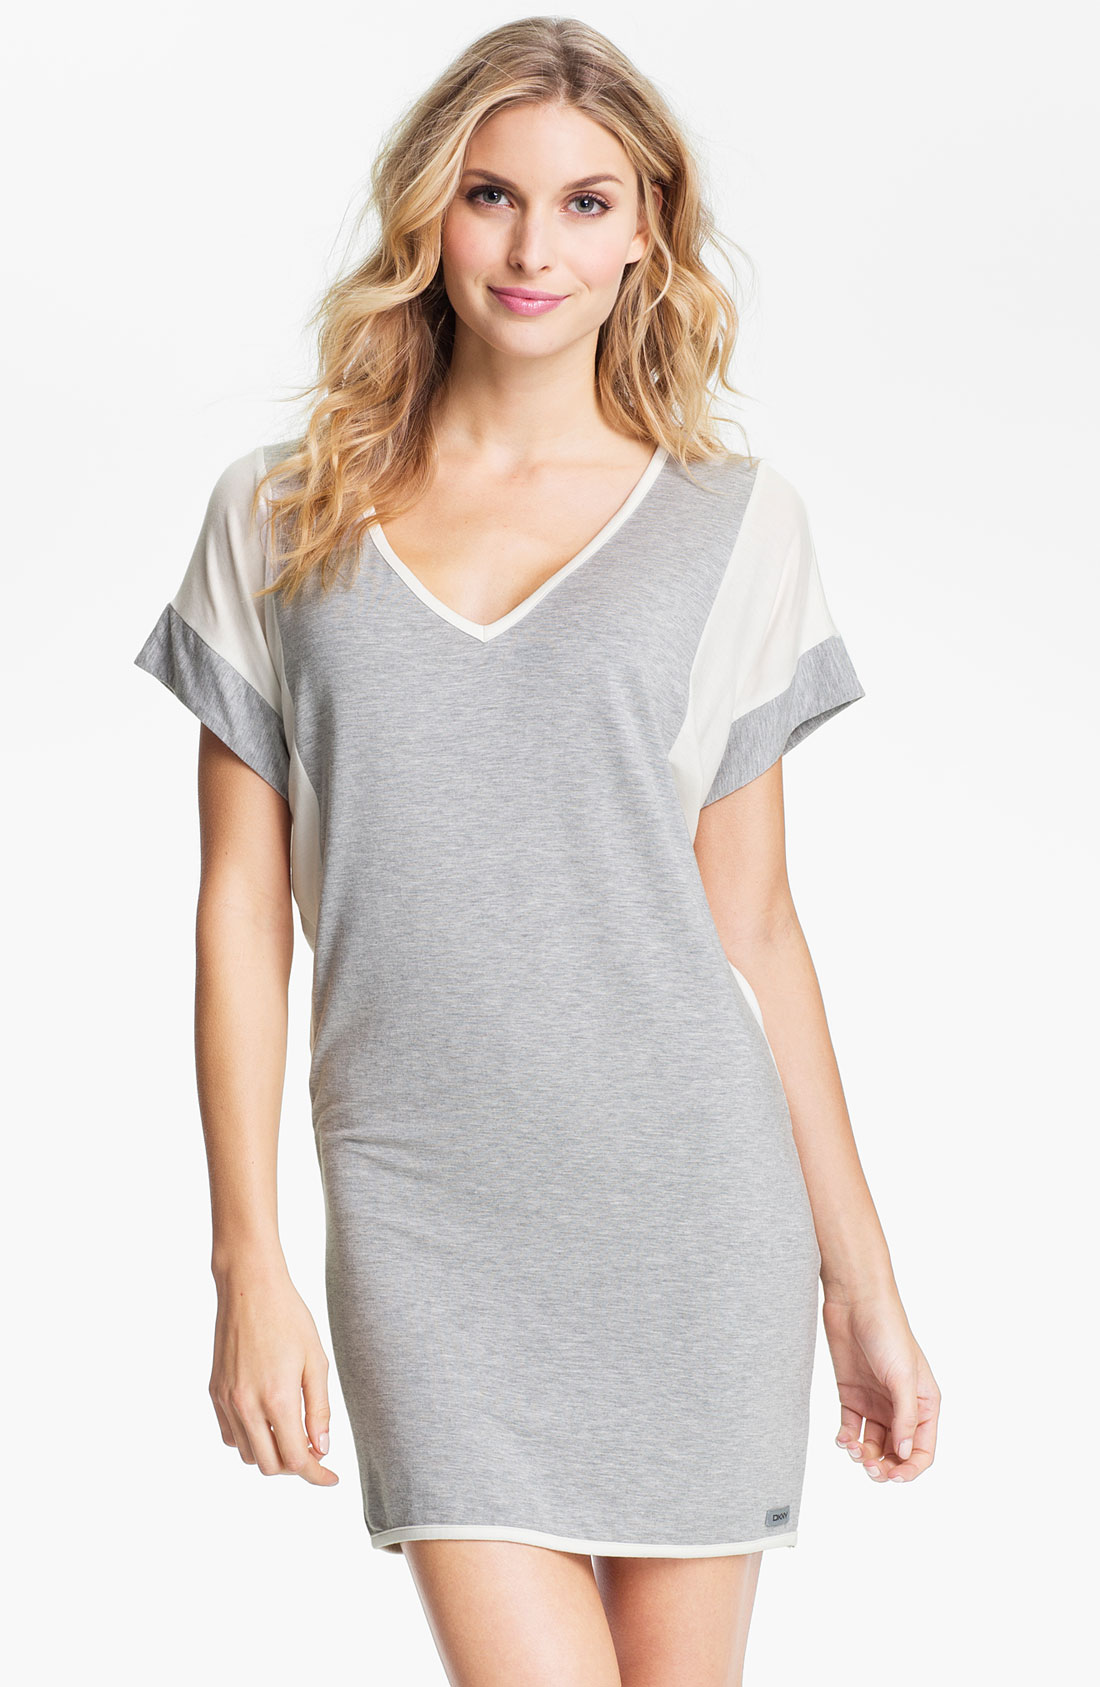 Dkny Short Sleeve Sleep Shirt In Gray Grey Heather Lyst